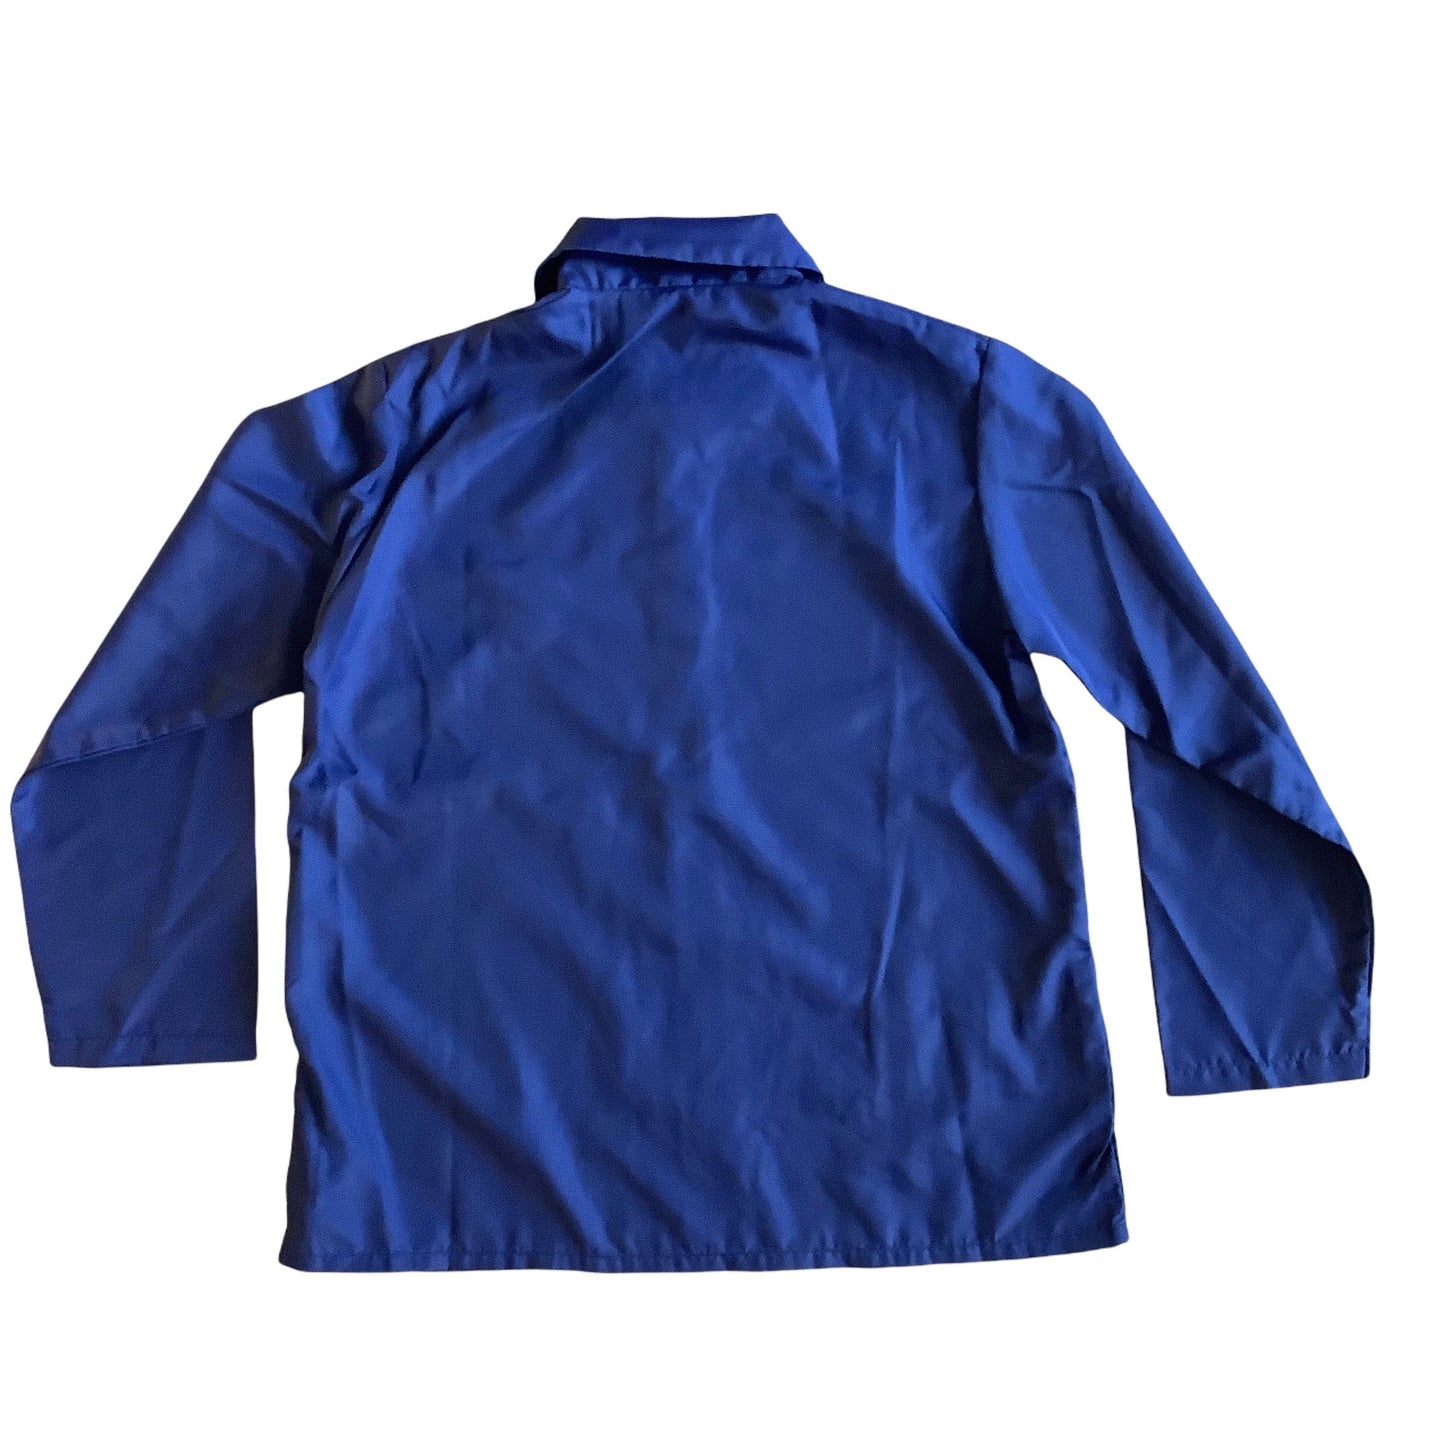 Vintage 1960s Blue "ZORRO" Nylon Shirt / Blouse  8-10Y